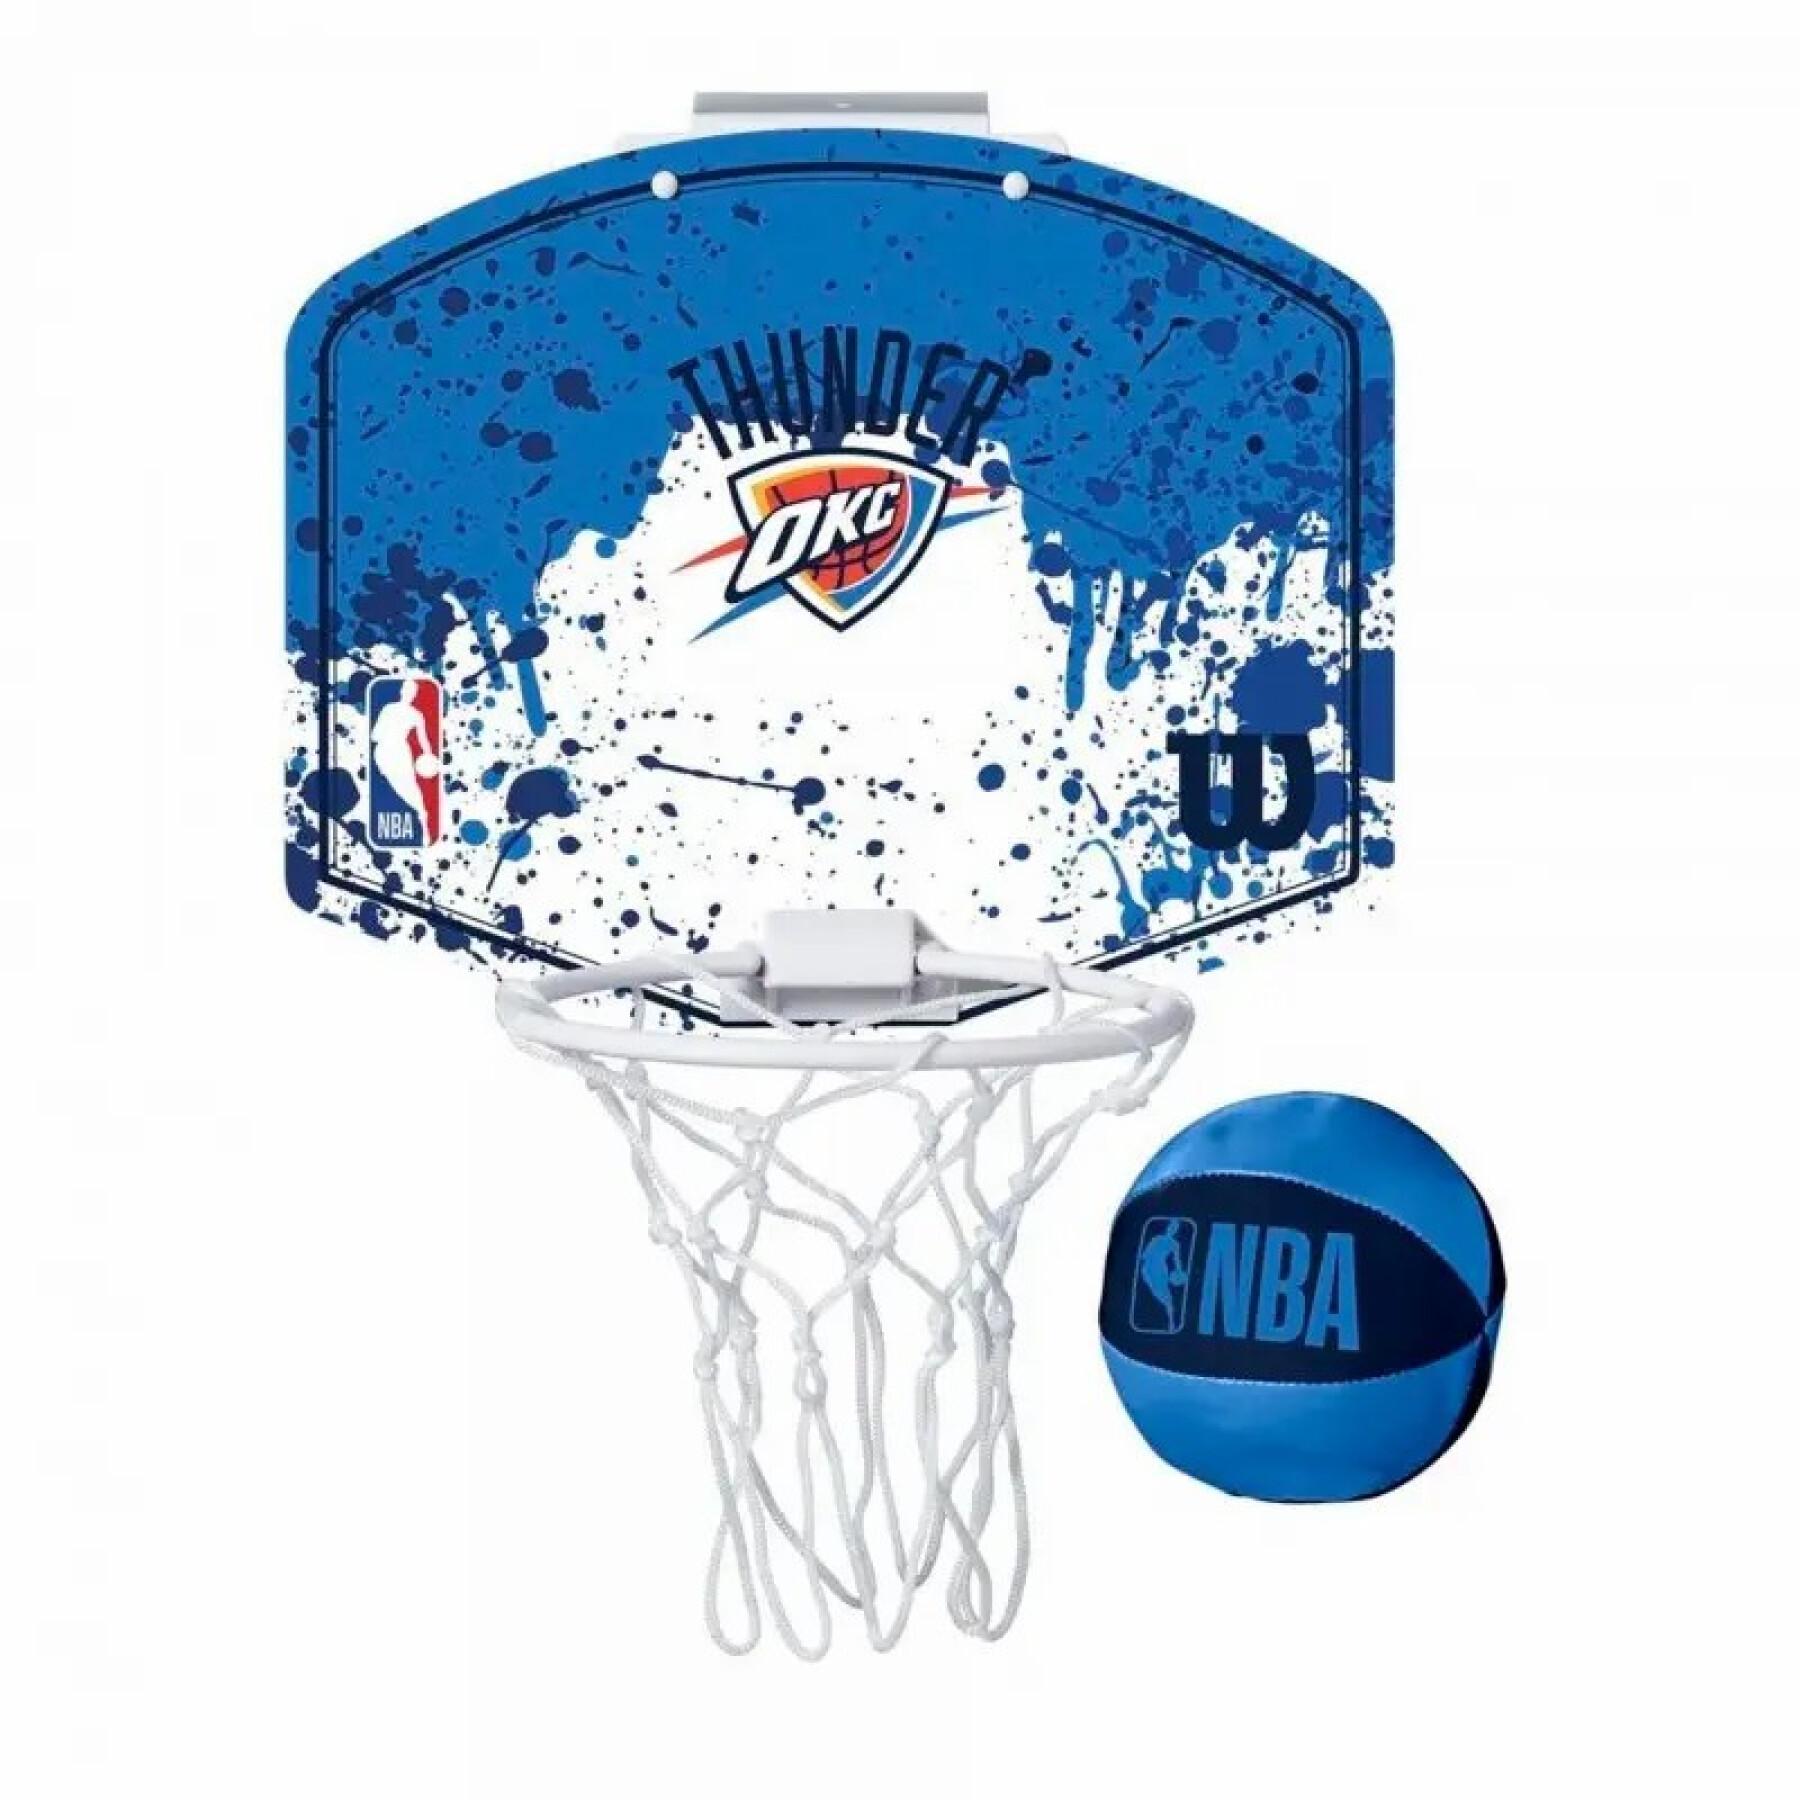 Mini basketbalhoepel Oklahoma City Thunder NBA Team